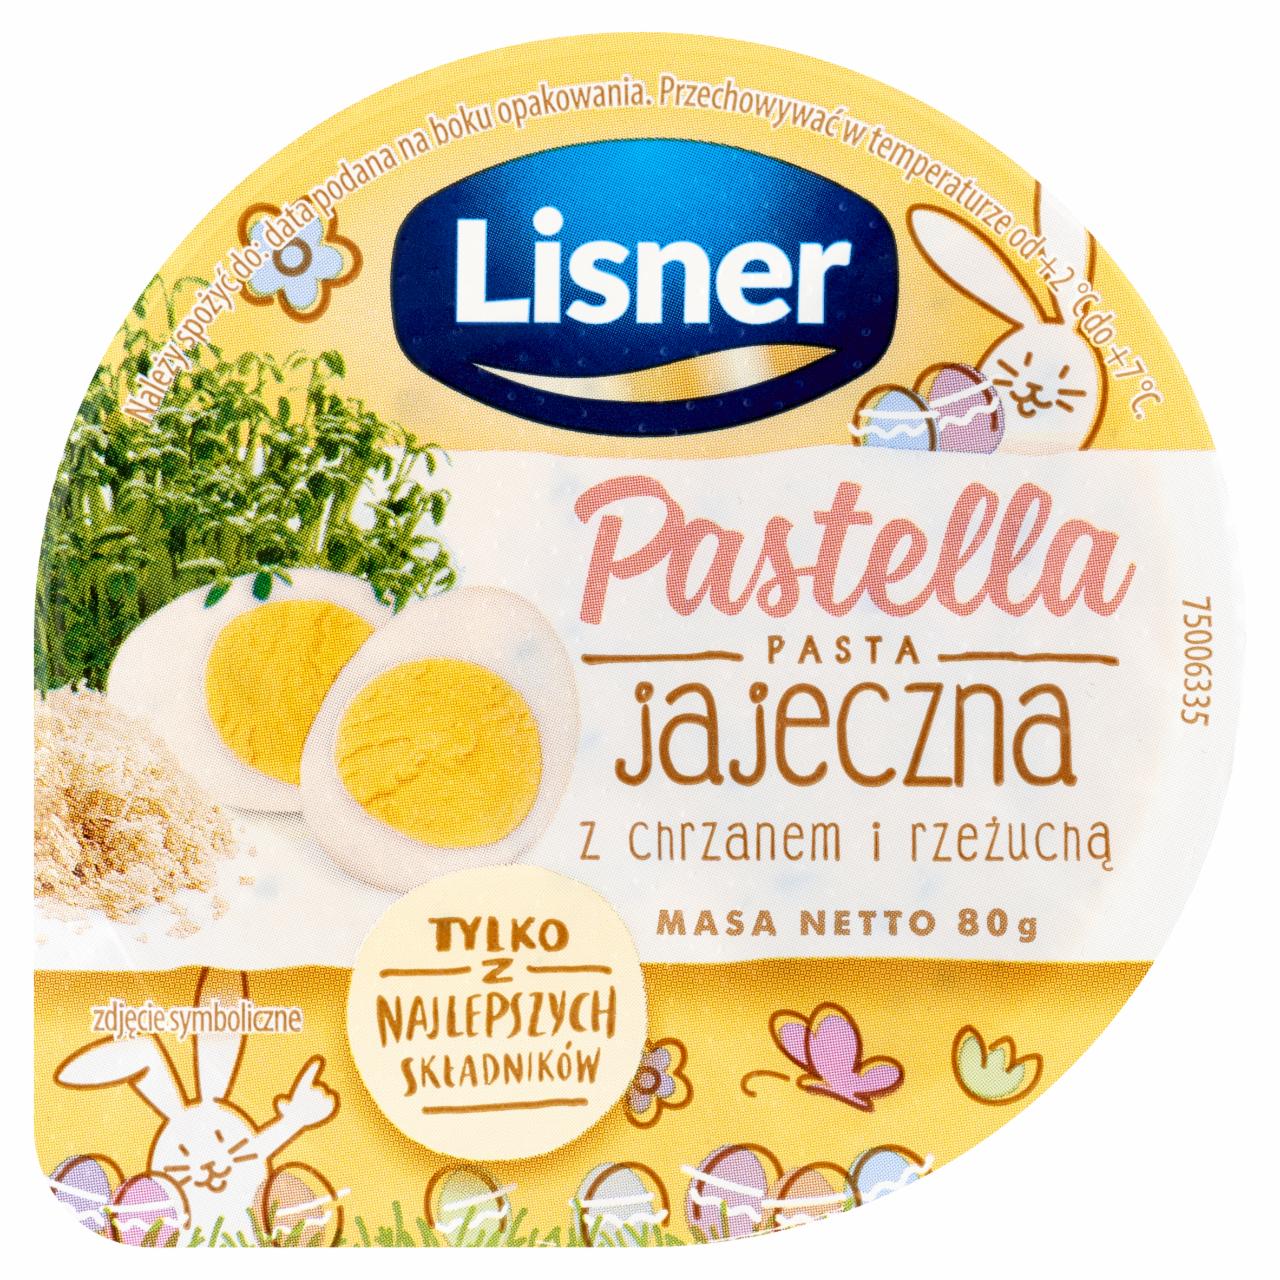 Fotografie - Pastella Pasta jajeczna ze szczypiorkiem Lisner